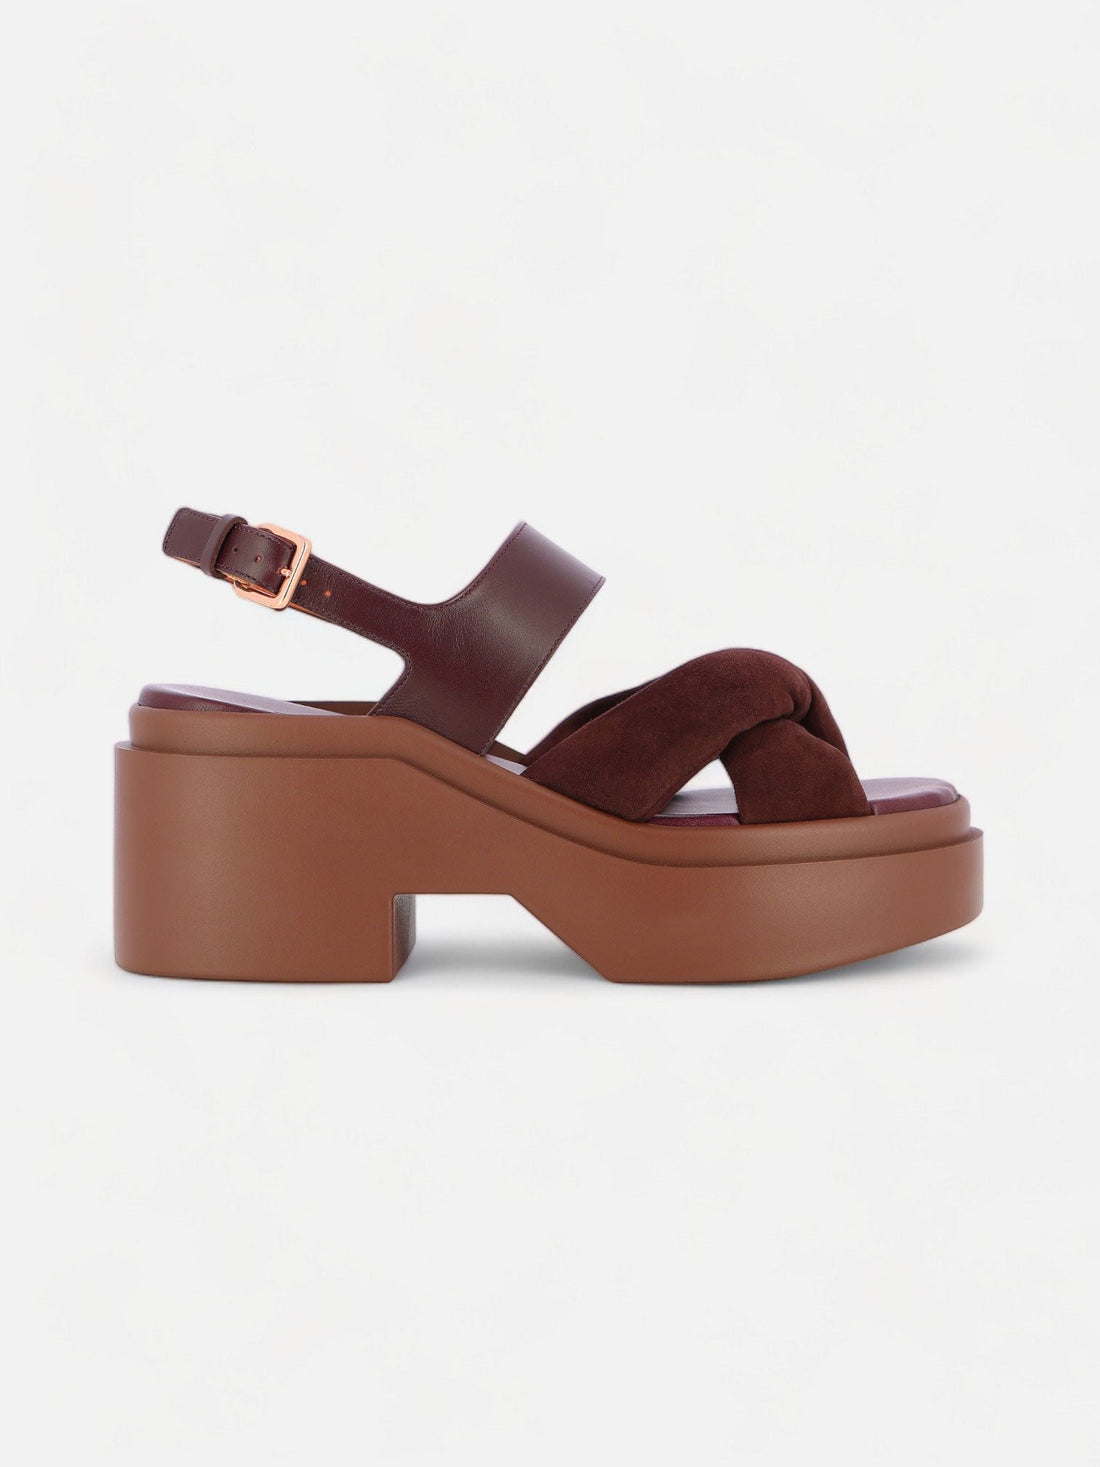 SANDALS - NOVIA sandals, suede brown - 3606063983204 - Clergerie Paris - Europe